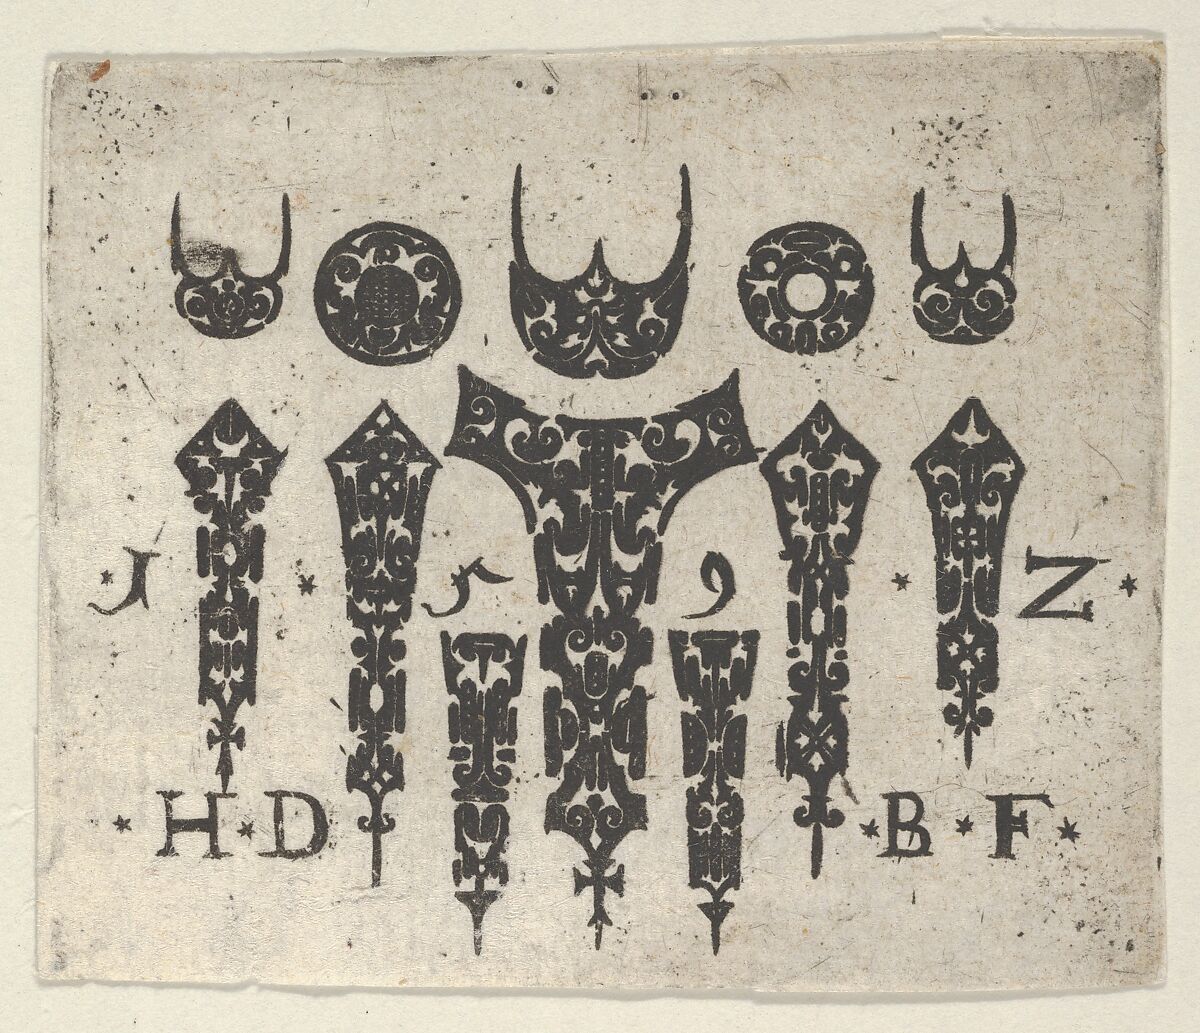 Blackwork Print with a Row of Seven Vertical Fillets Below a Row of Three-Pronged Motifs and Circles, Hans de Bull (German, active 1592–1604), Blackwork engraving 